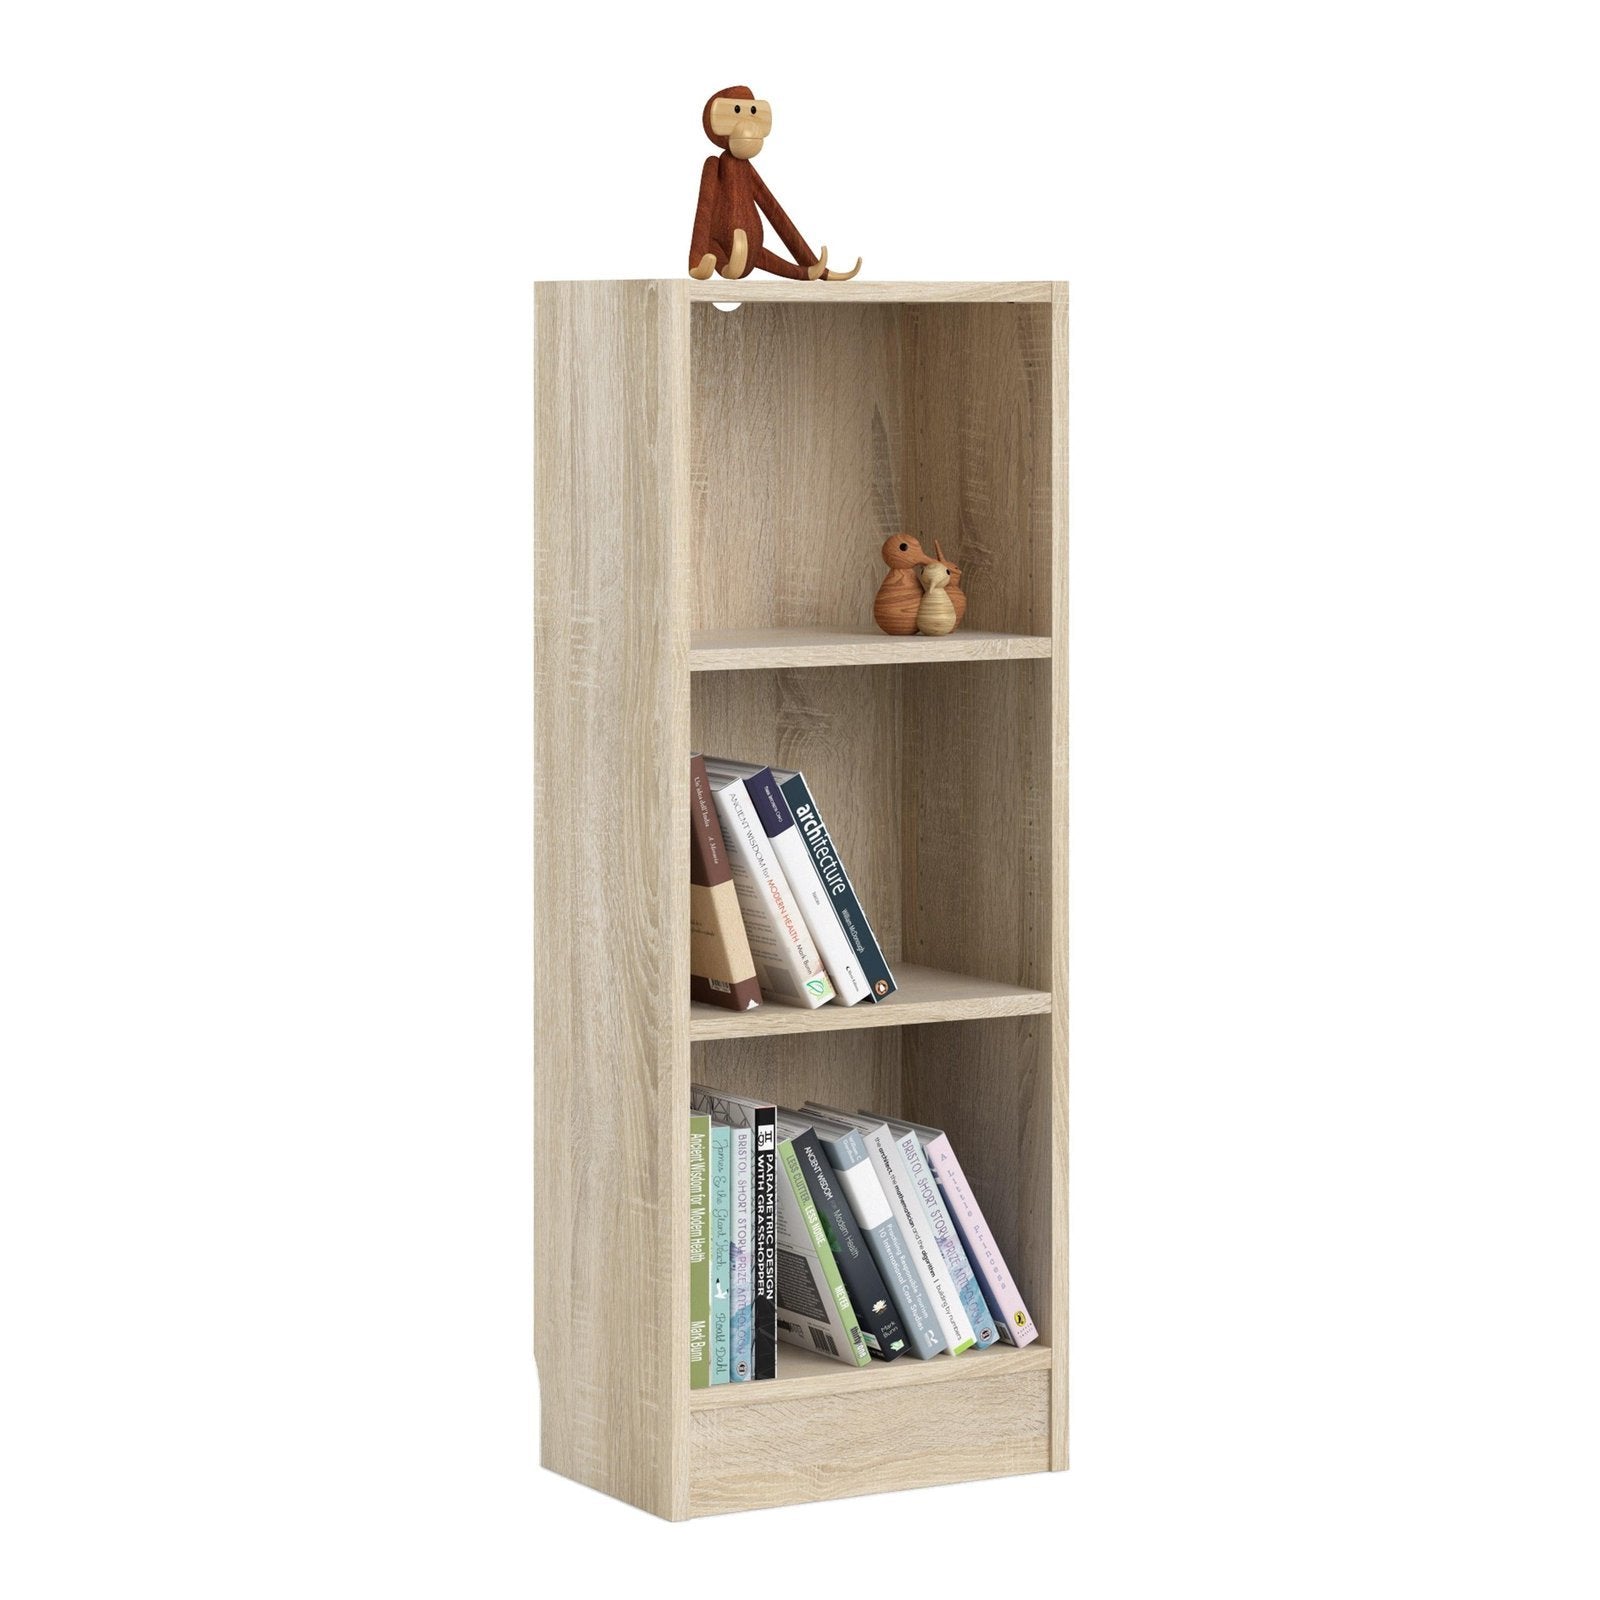 Basic Low Narrow Bookcase 2 Shelves